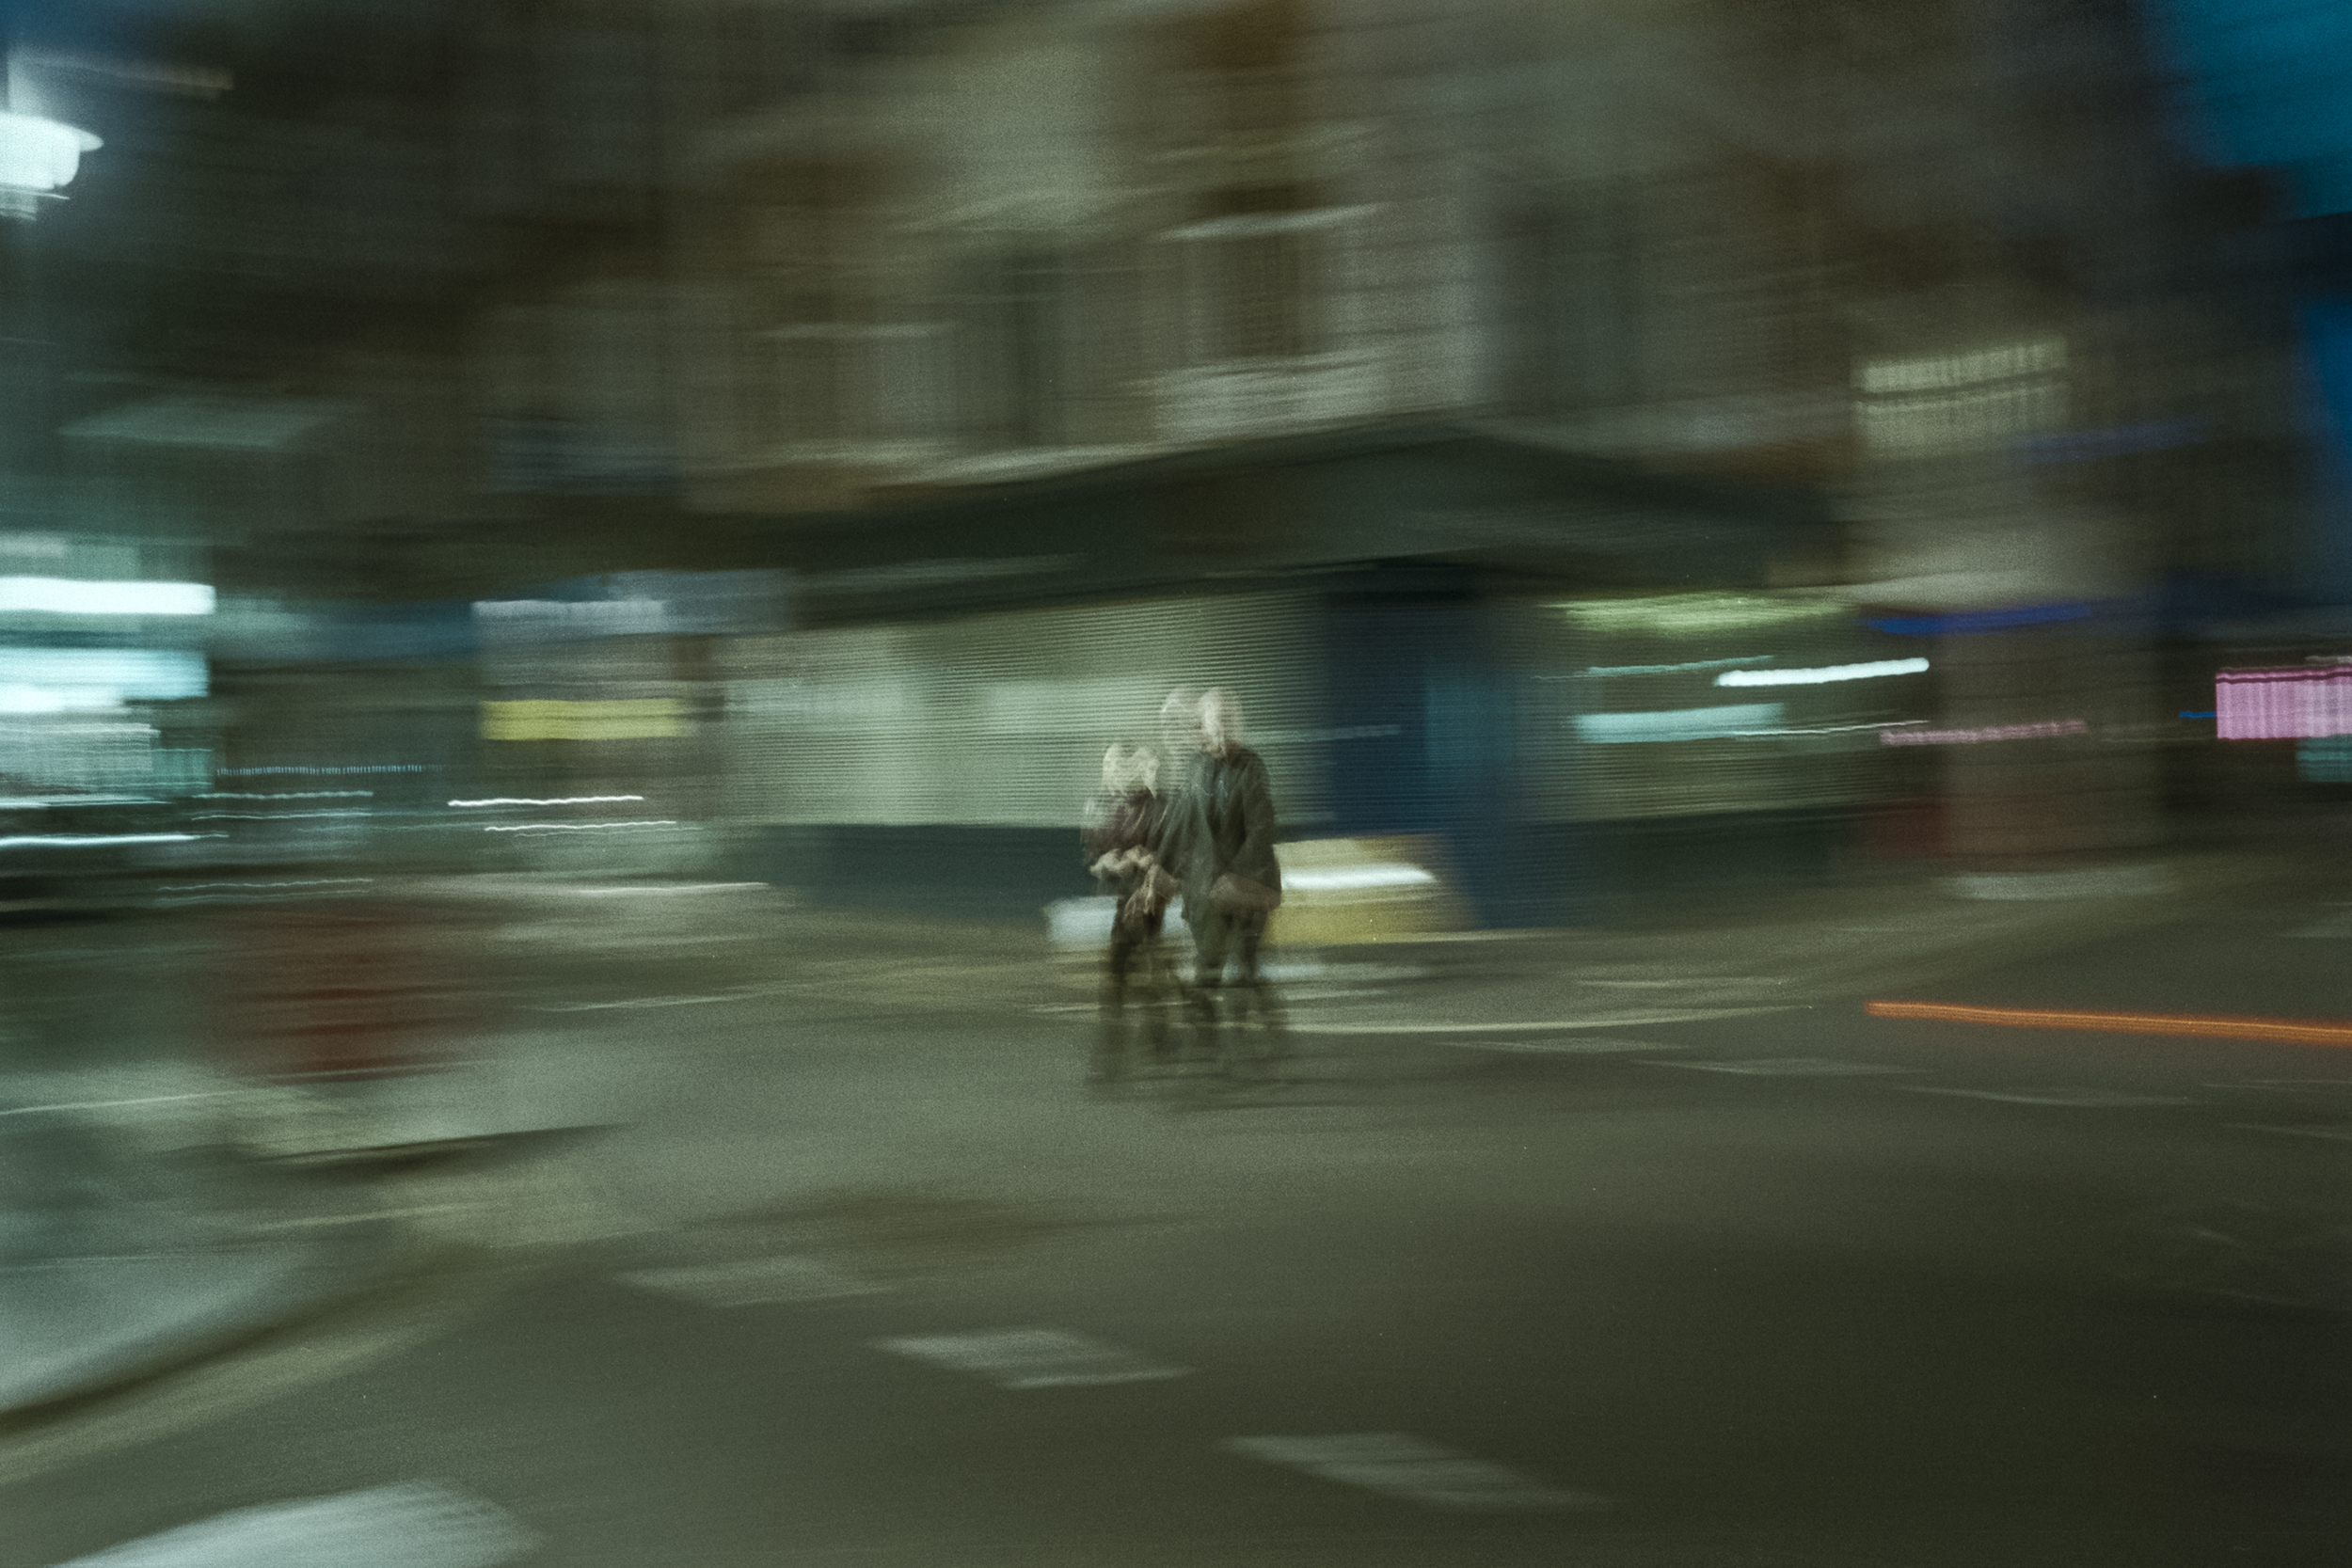 Oscar-arribas-photography-fotografo-portrait-retrato-editorial-london-street-photography-urbana-londres-film-analog-35mm-night-nocturna-58.jpg